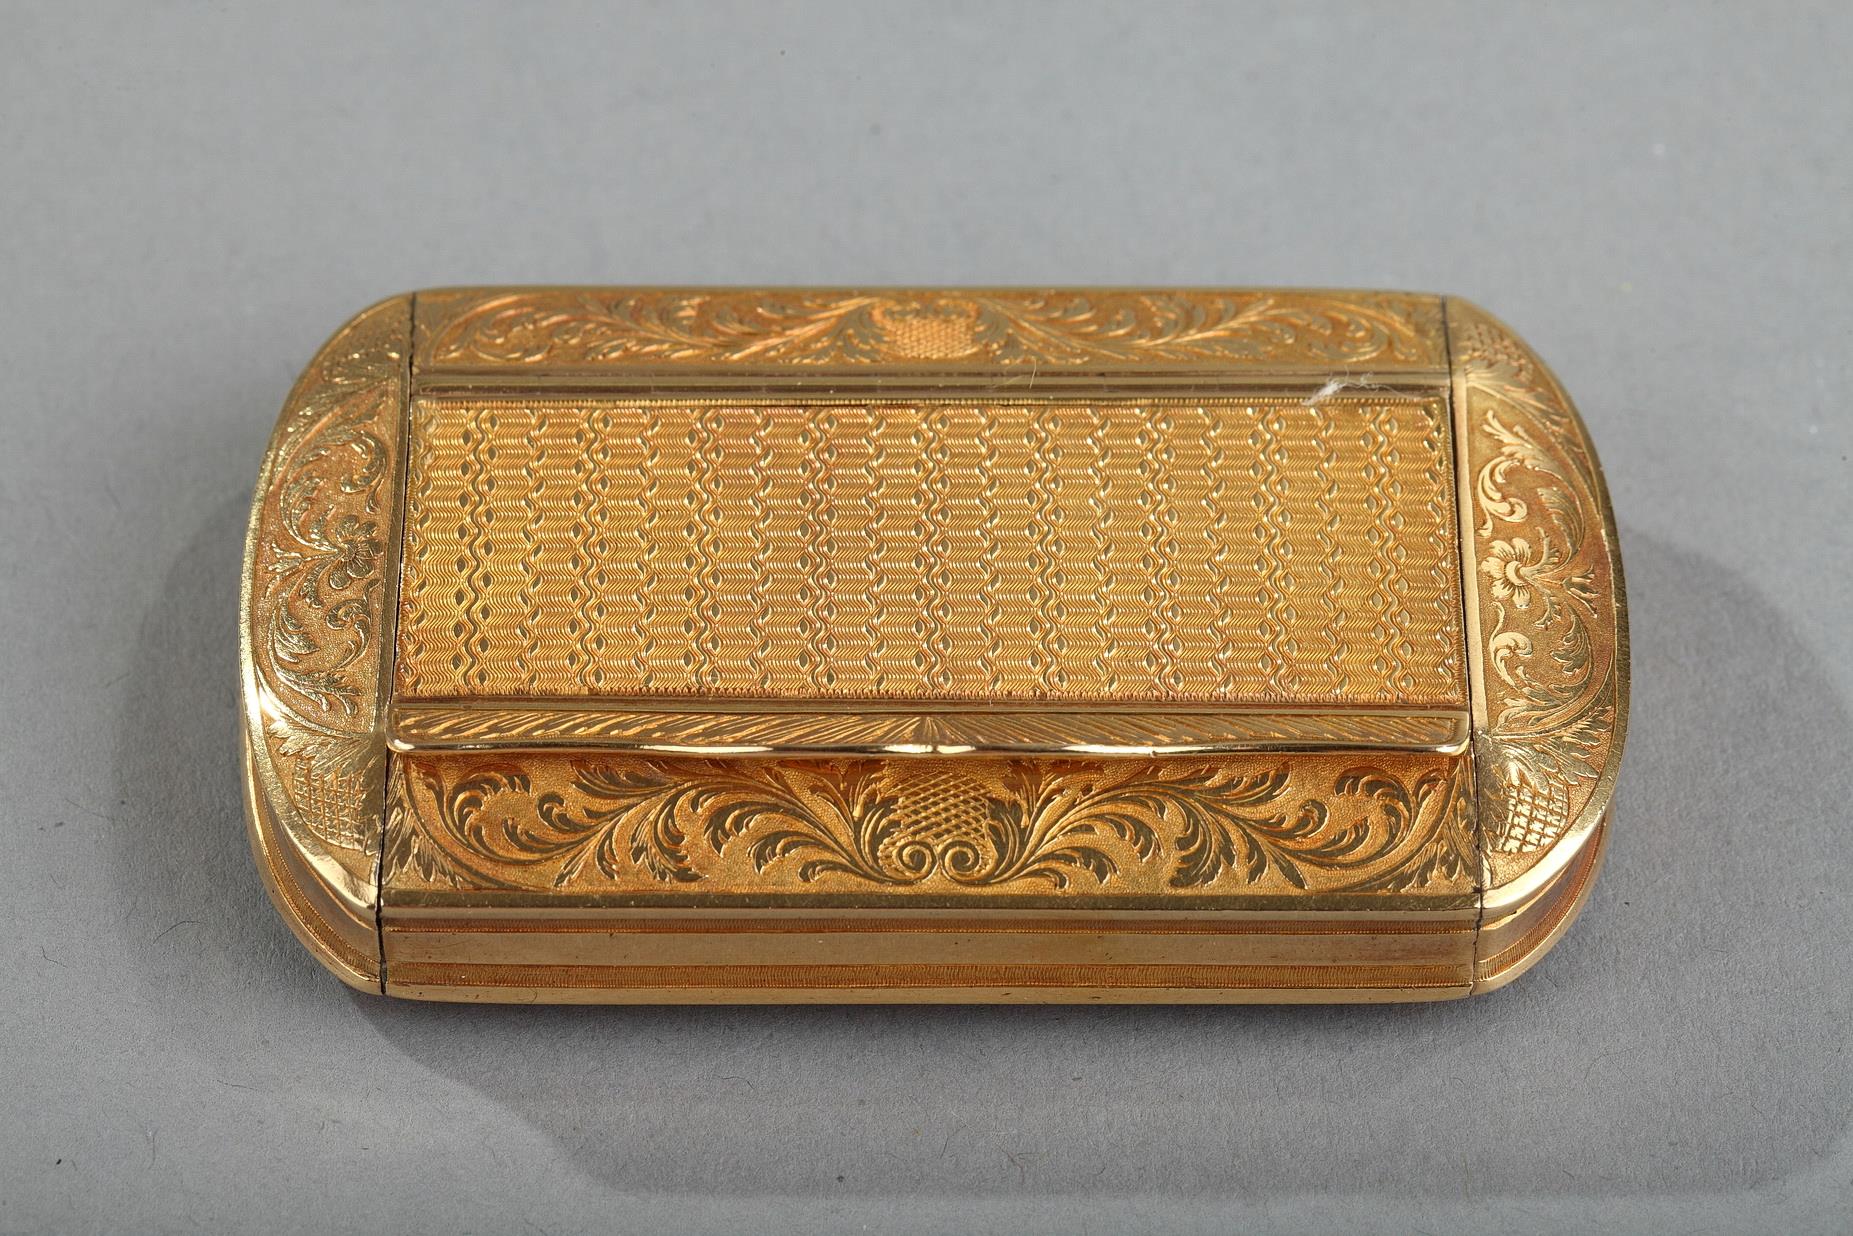 Gold Snuff Box, Restauration Period circa 1820-1830.